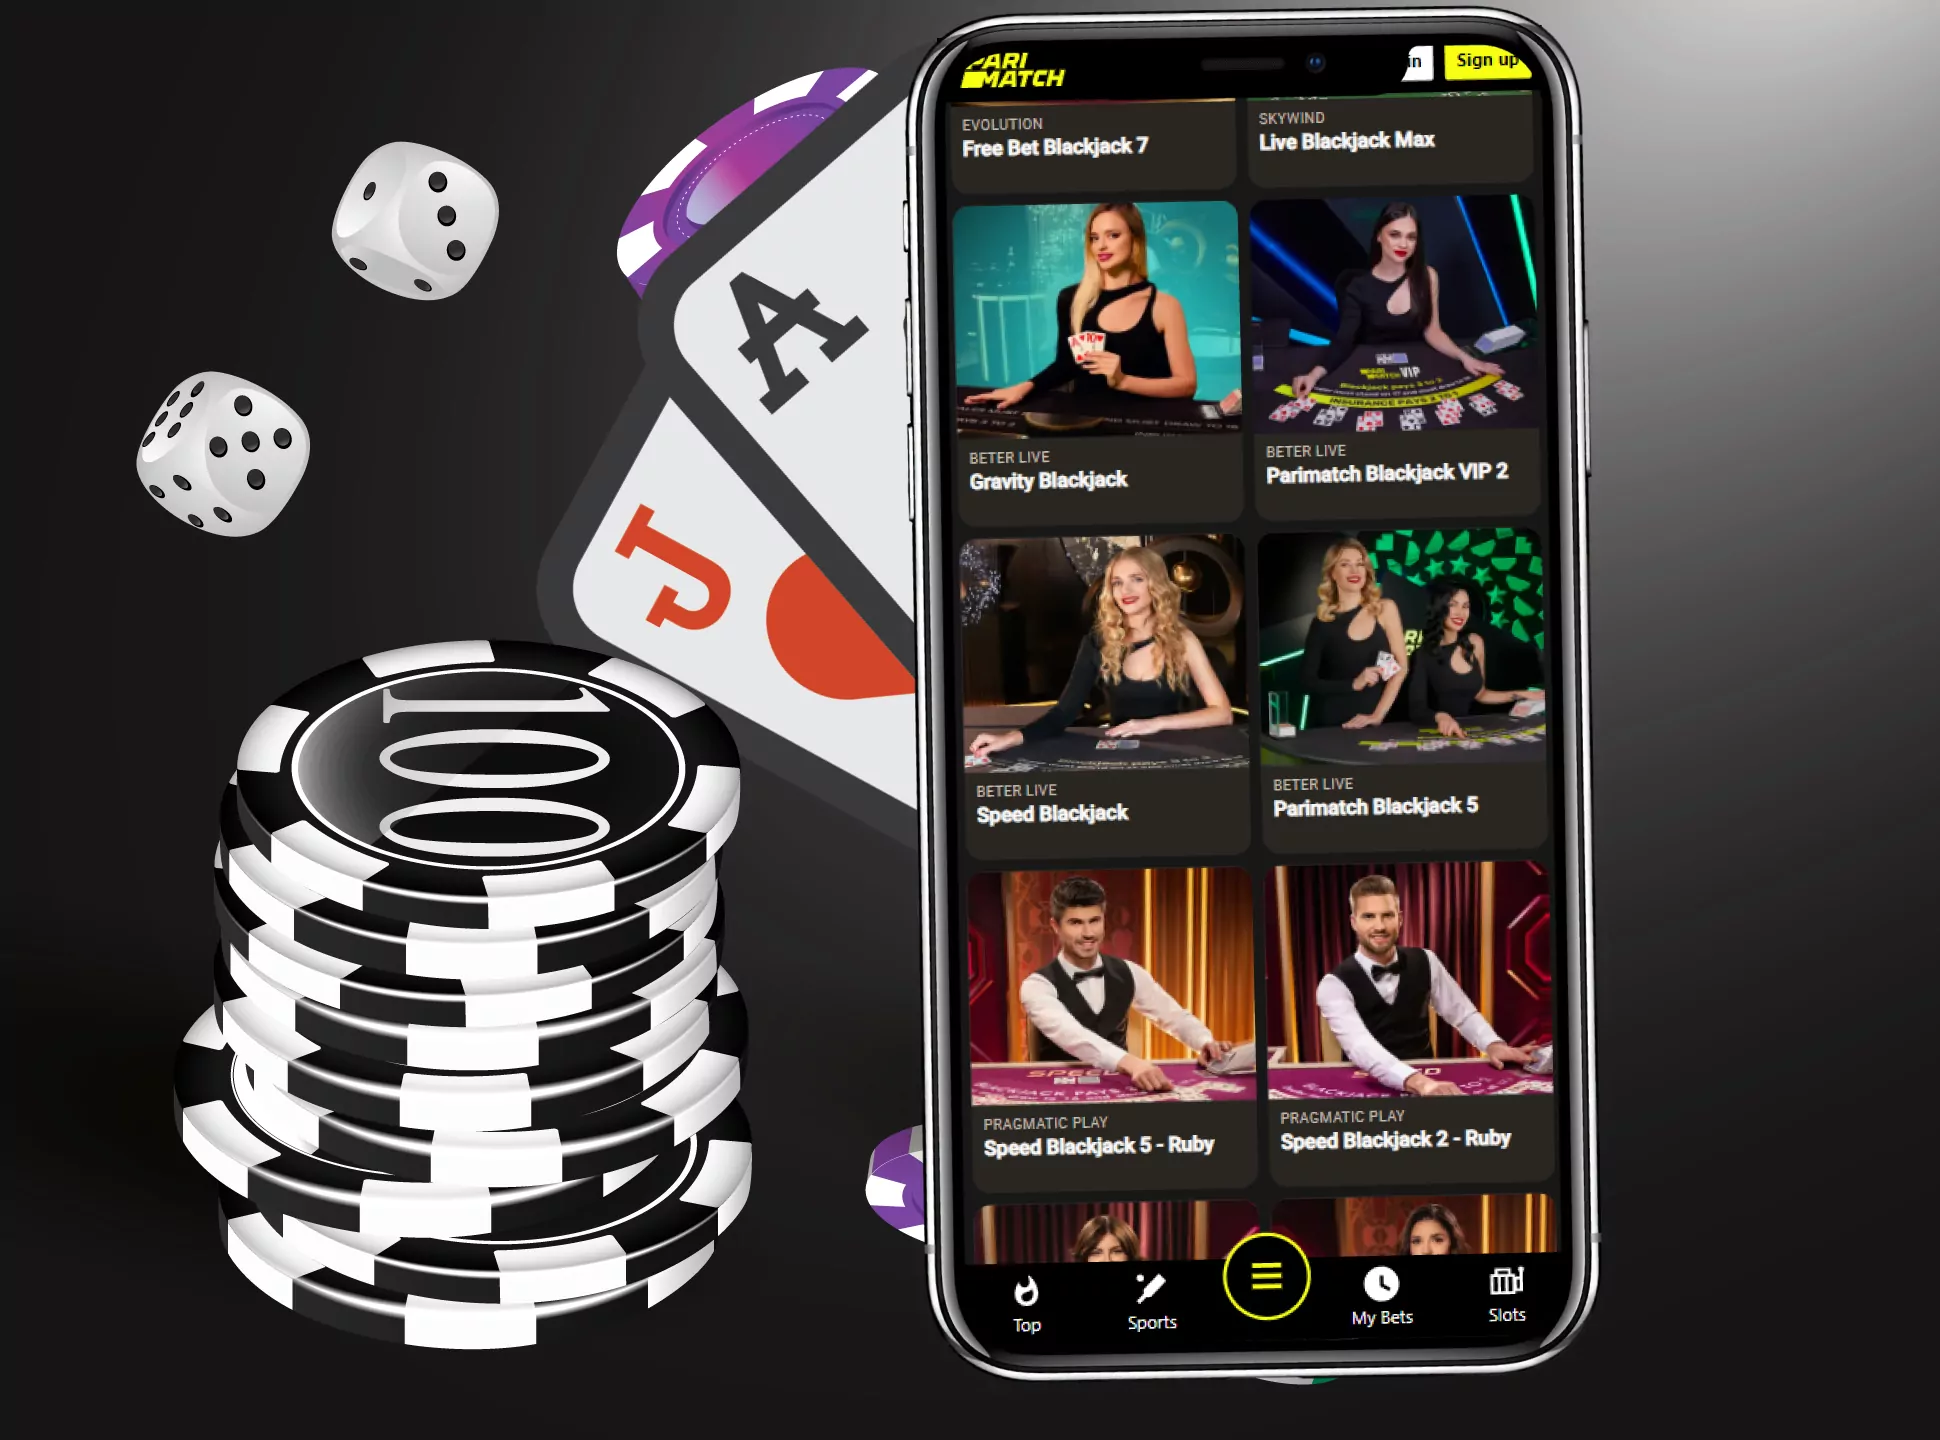 Play blackjack games in the Parimatch app.